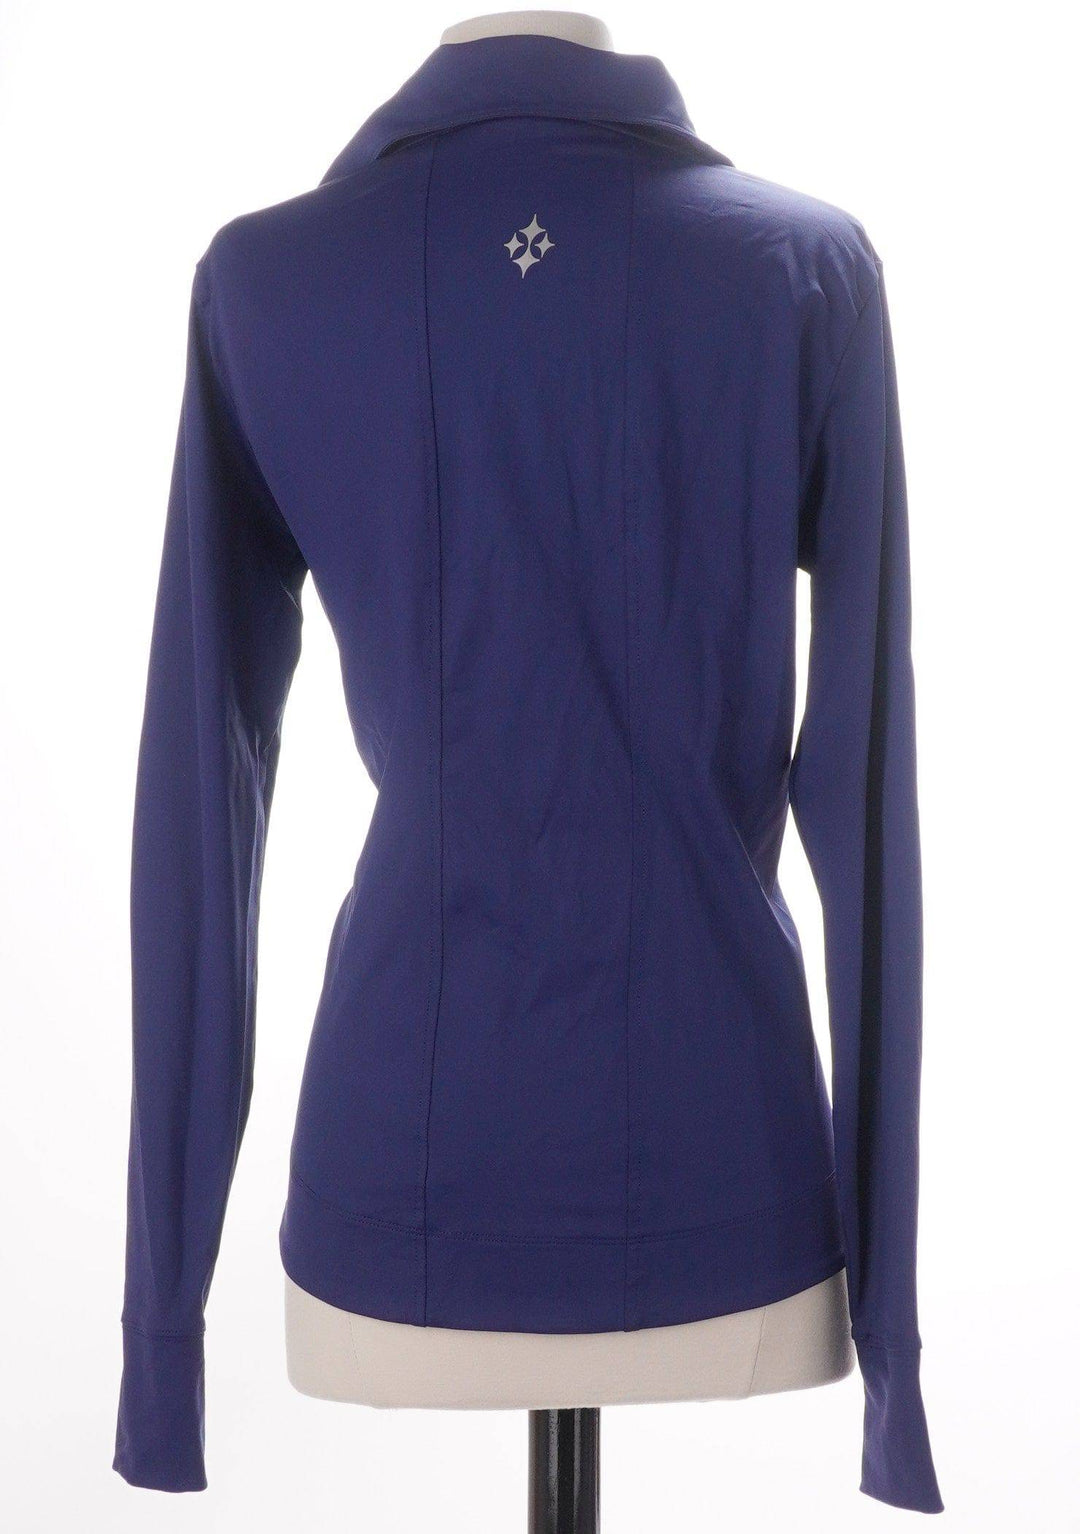 Jofit Blue / Small / Consigned Jofit Long Sleeve Jacket - Blue - Size Small